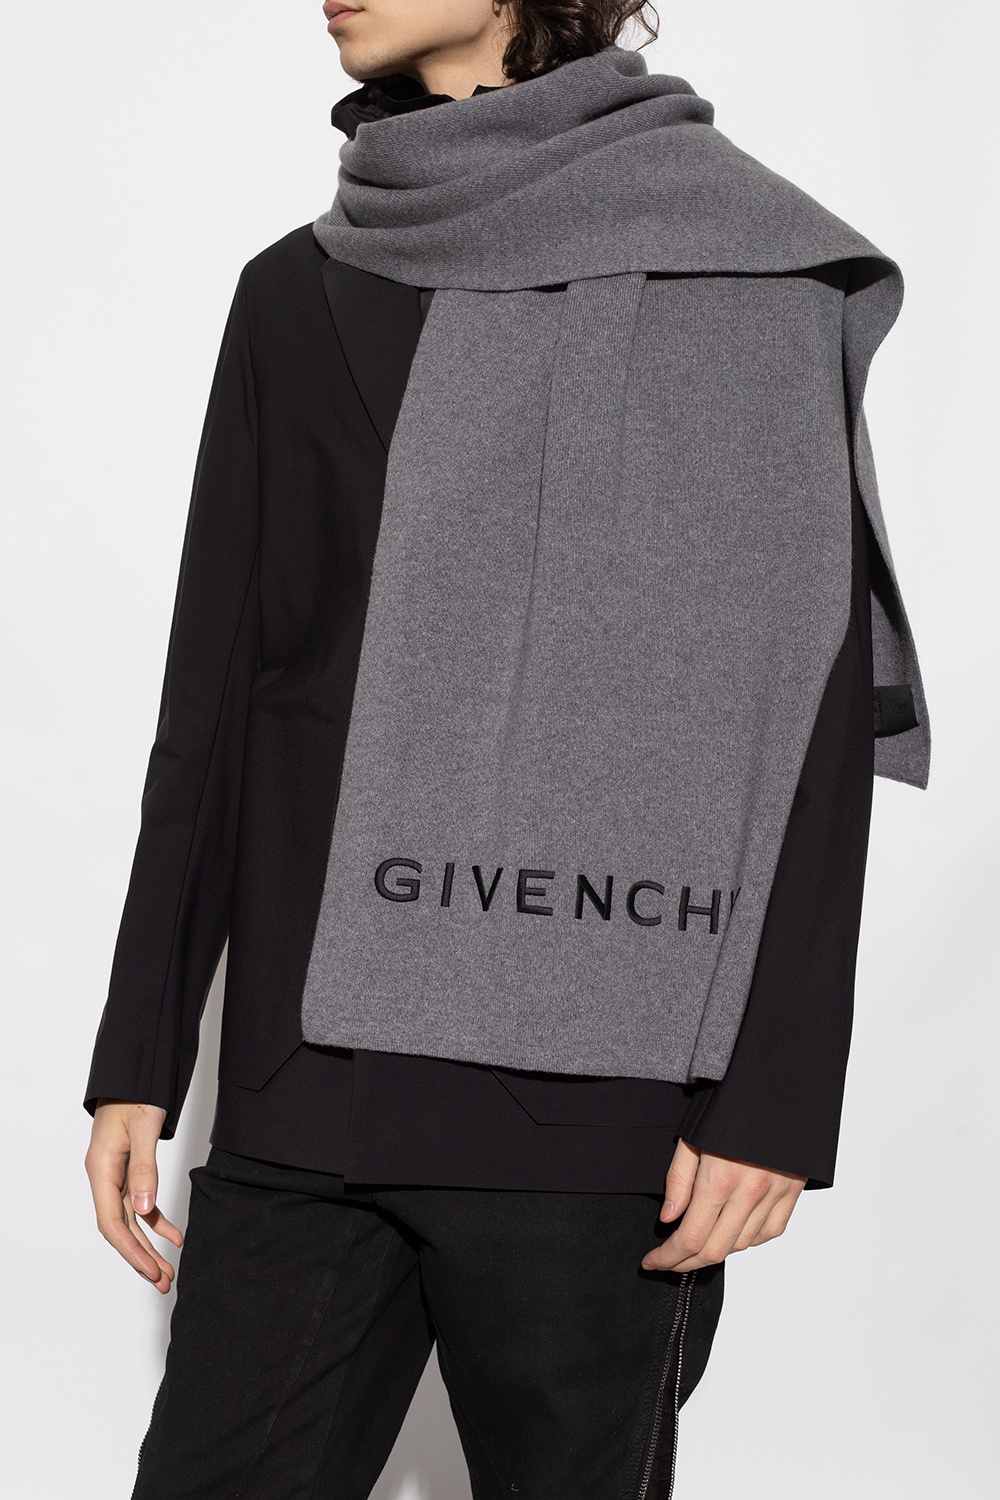 Givenchy iconic shape the givenchy antigona soft bag